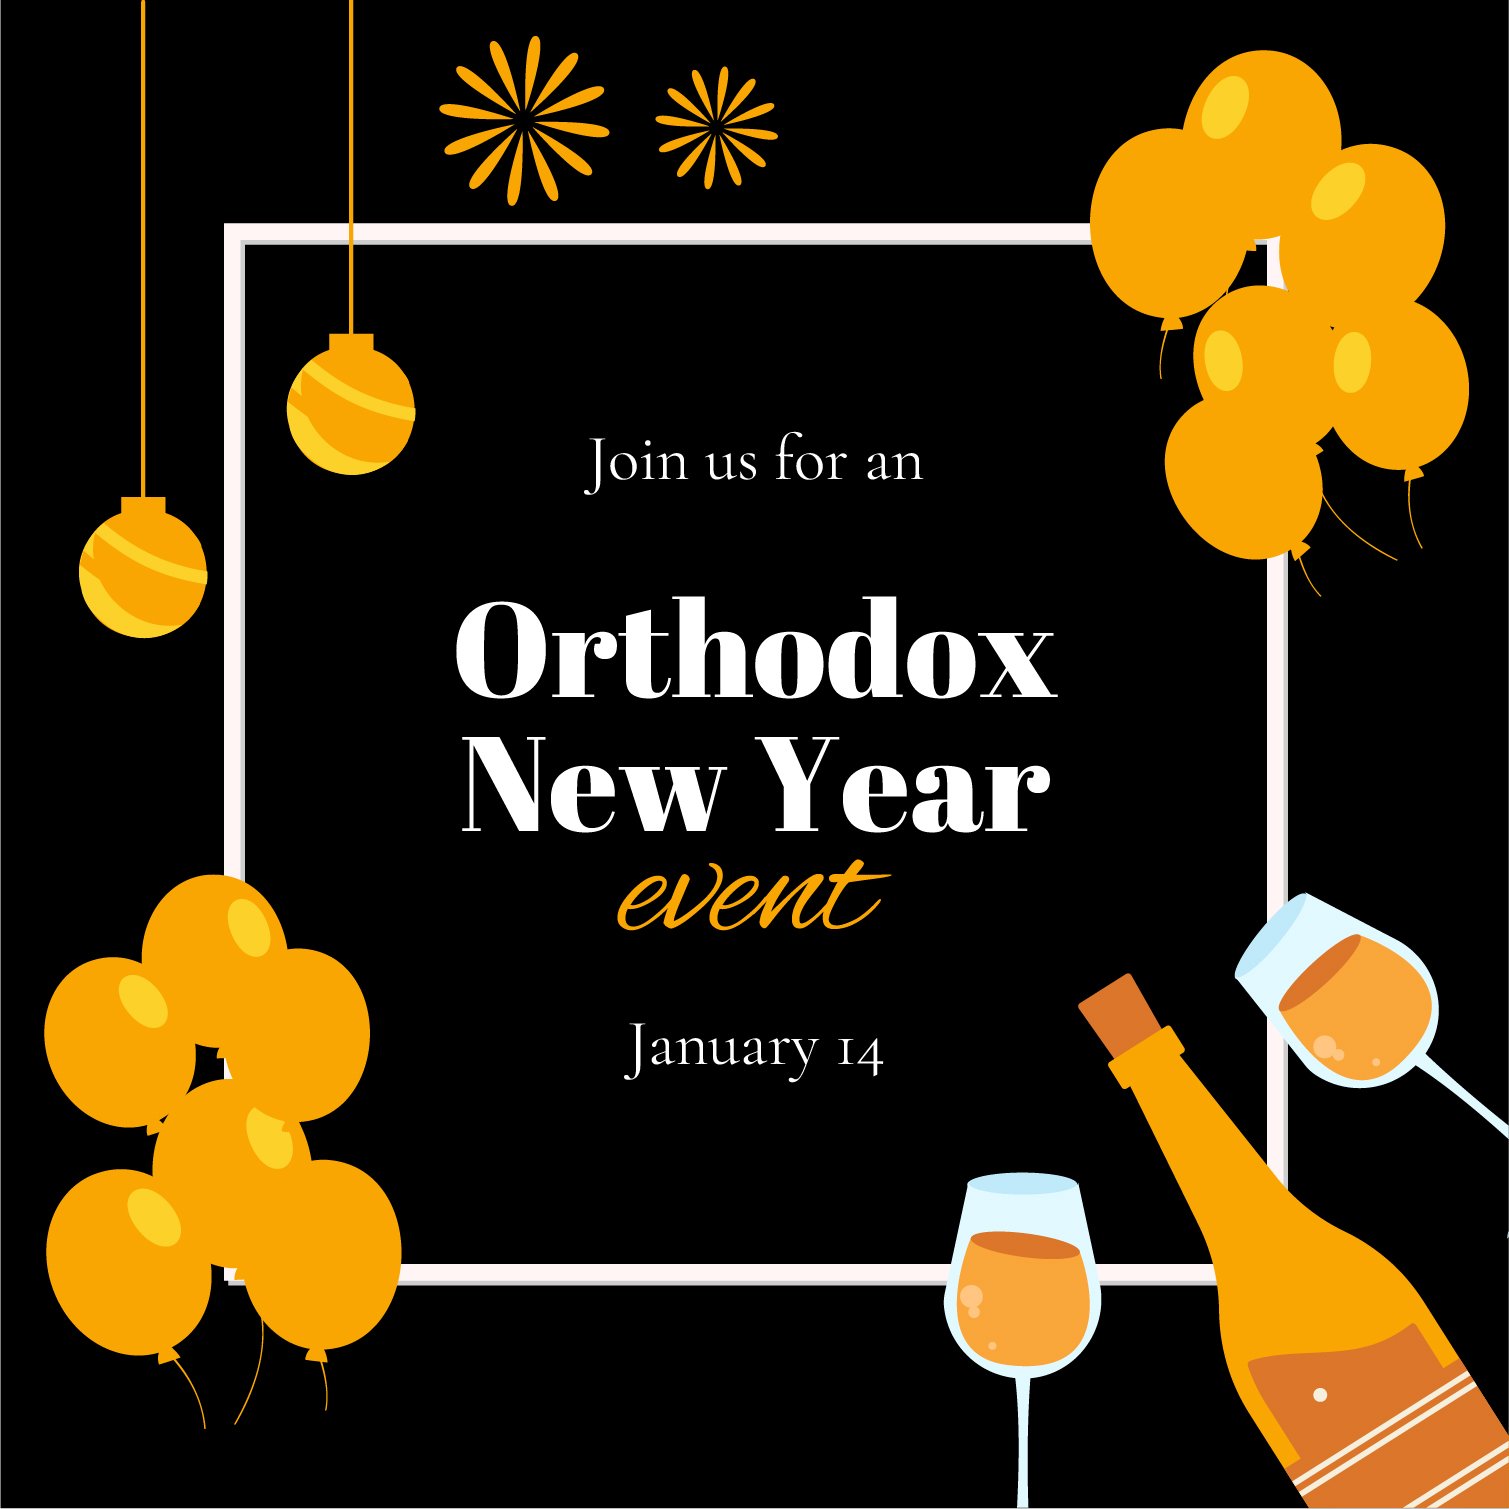 Orthodox New Year Flyer Vector in Illustrator, PSD, EPS, SVG, JPG, PNG